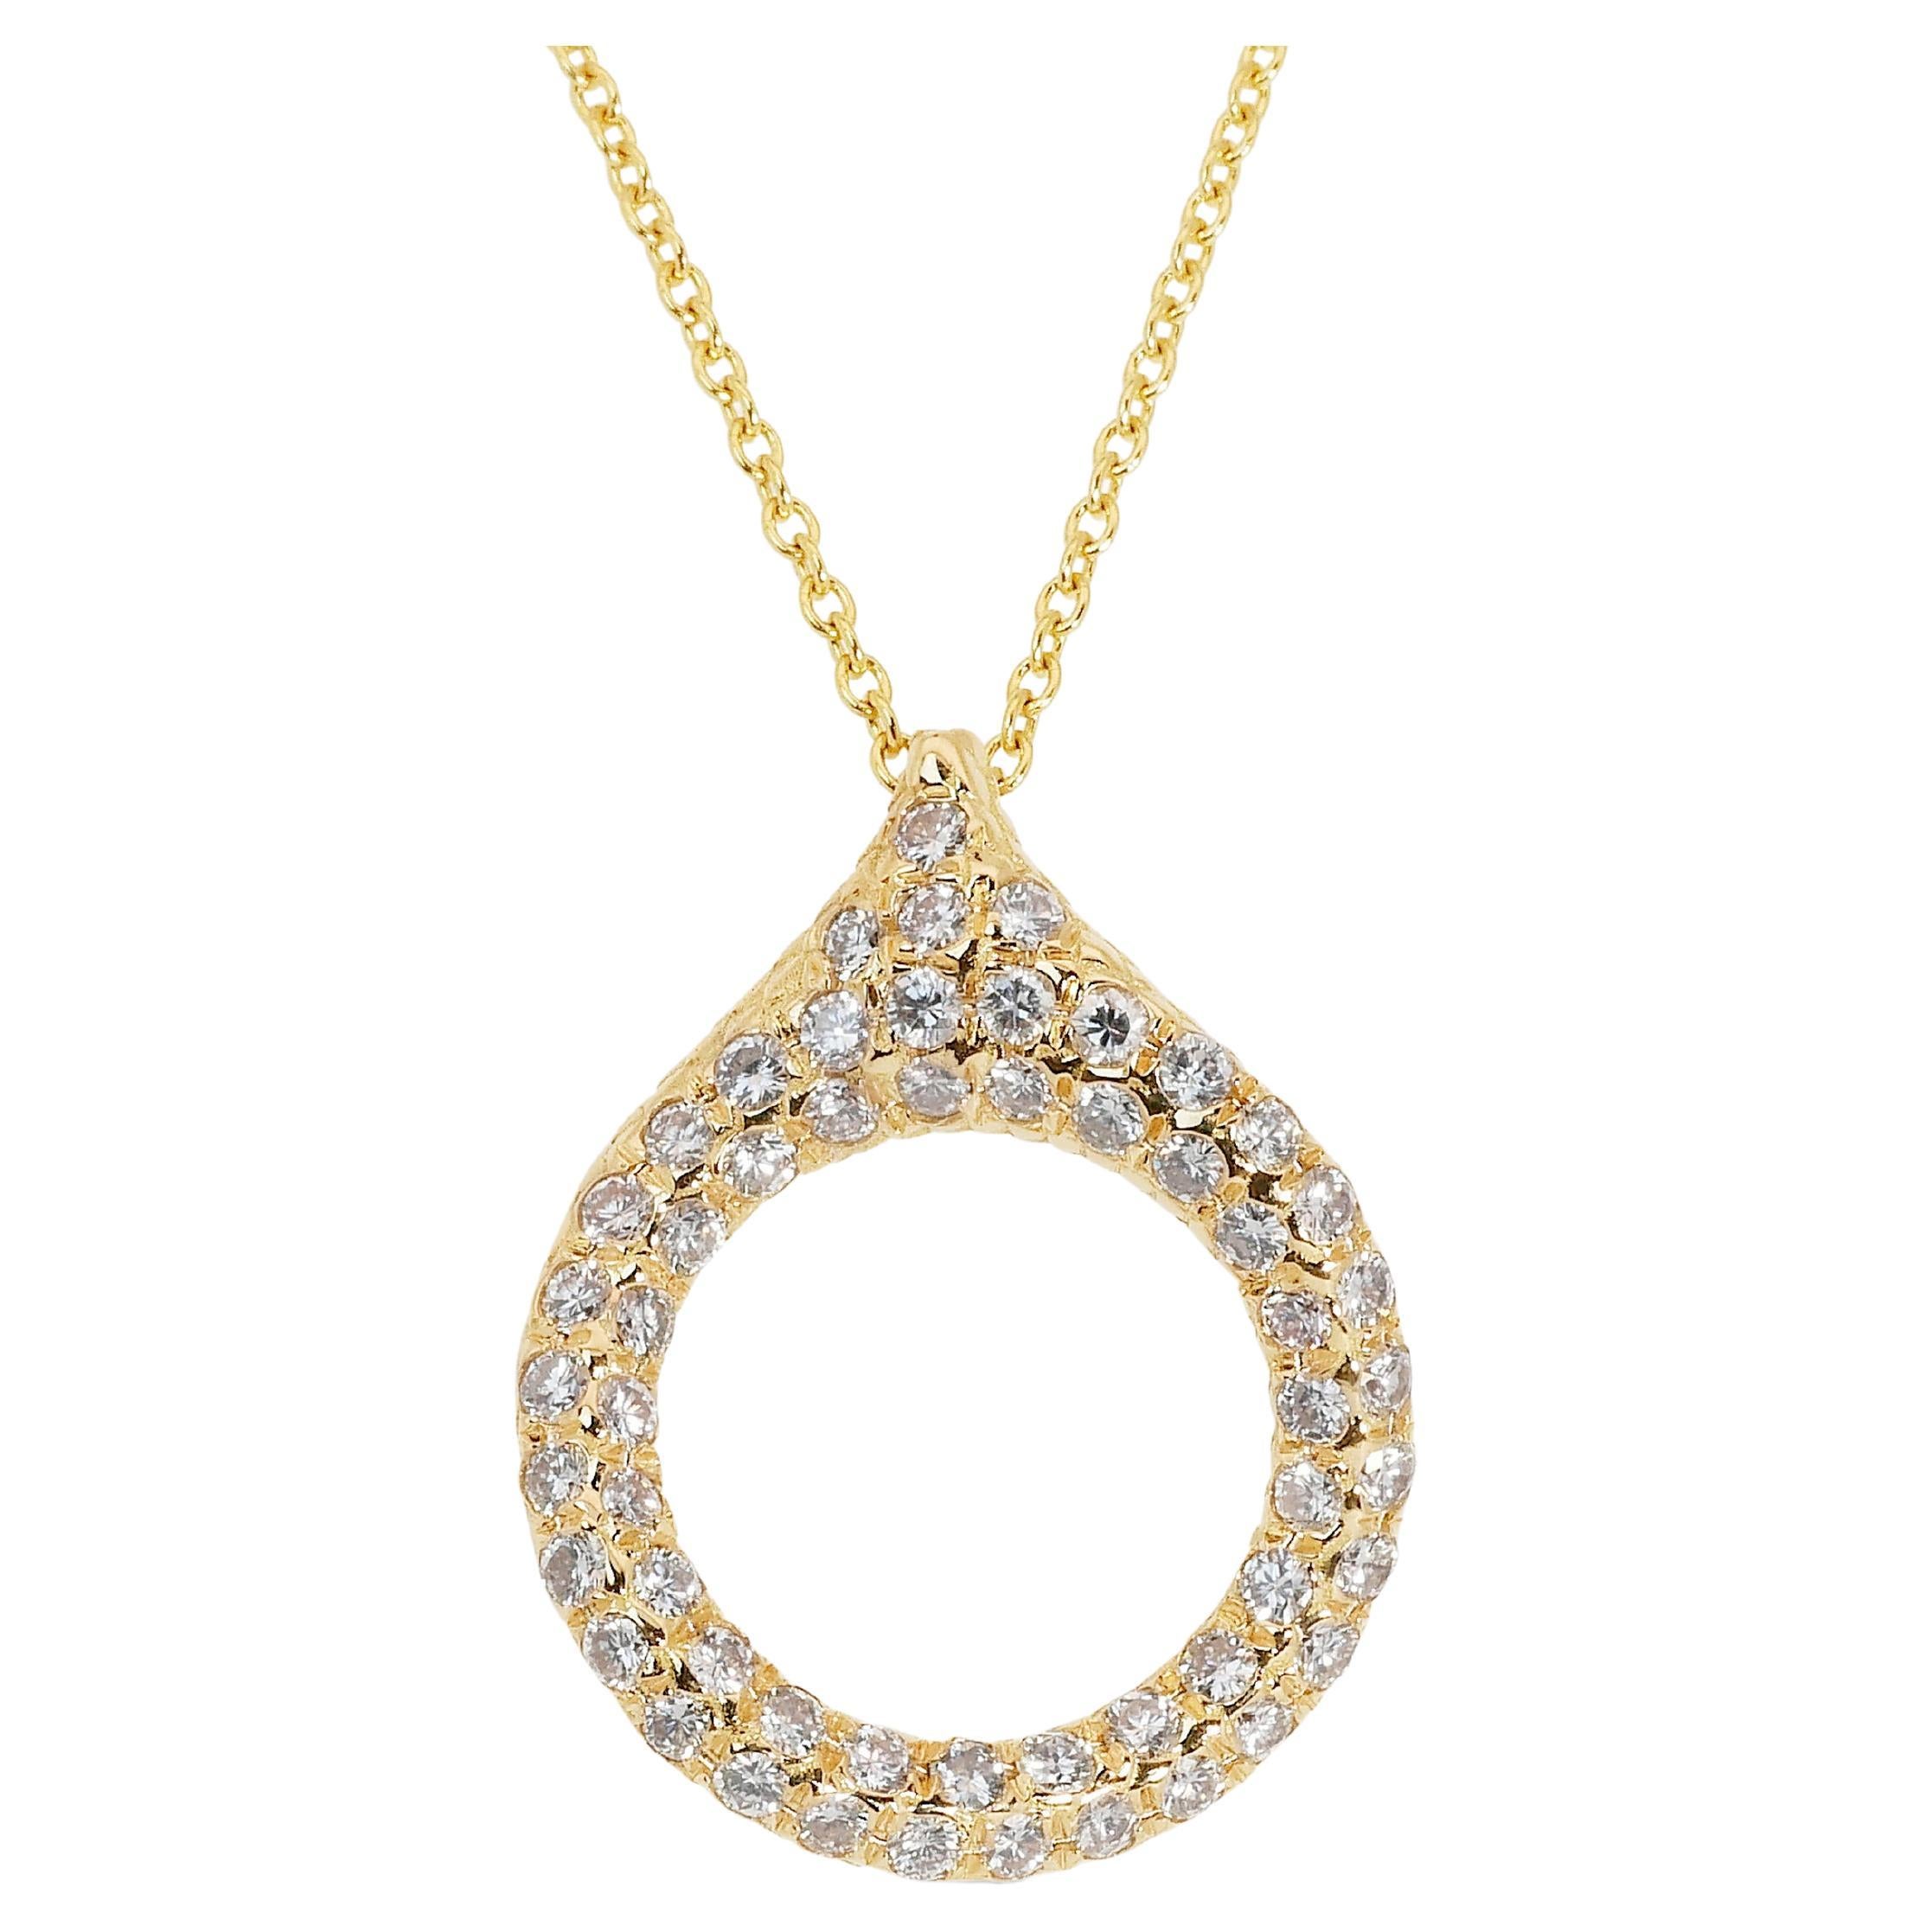 Dazzling 18k Yellow Gold Necklace w/ 1.16 Carat Natural Diamonds IGI Certificate